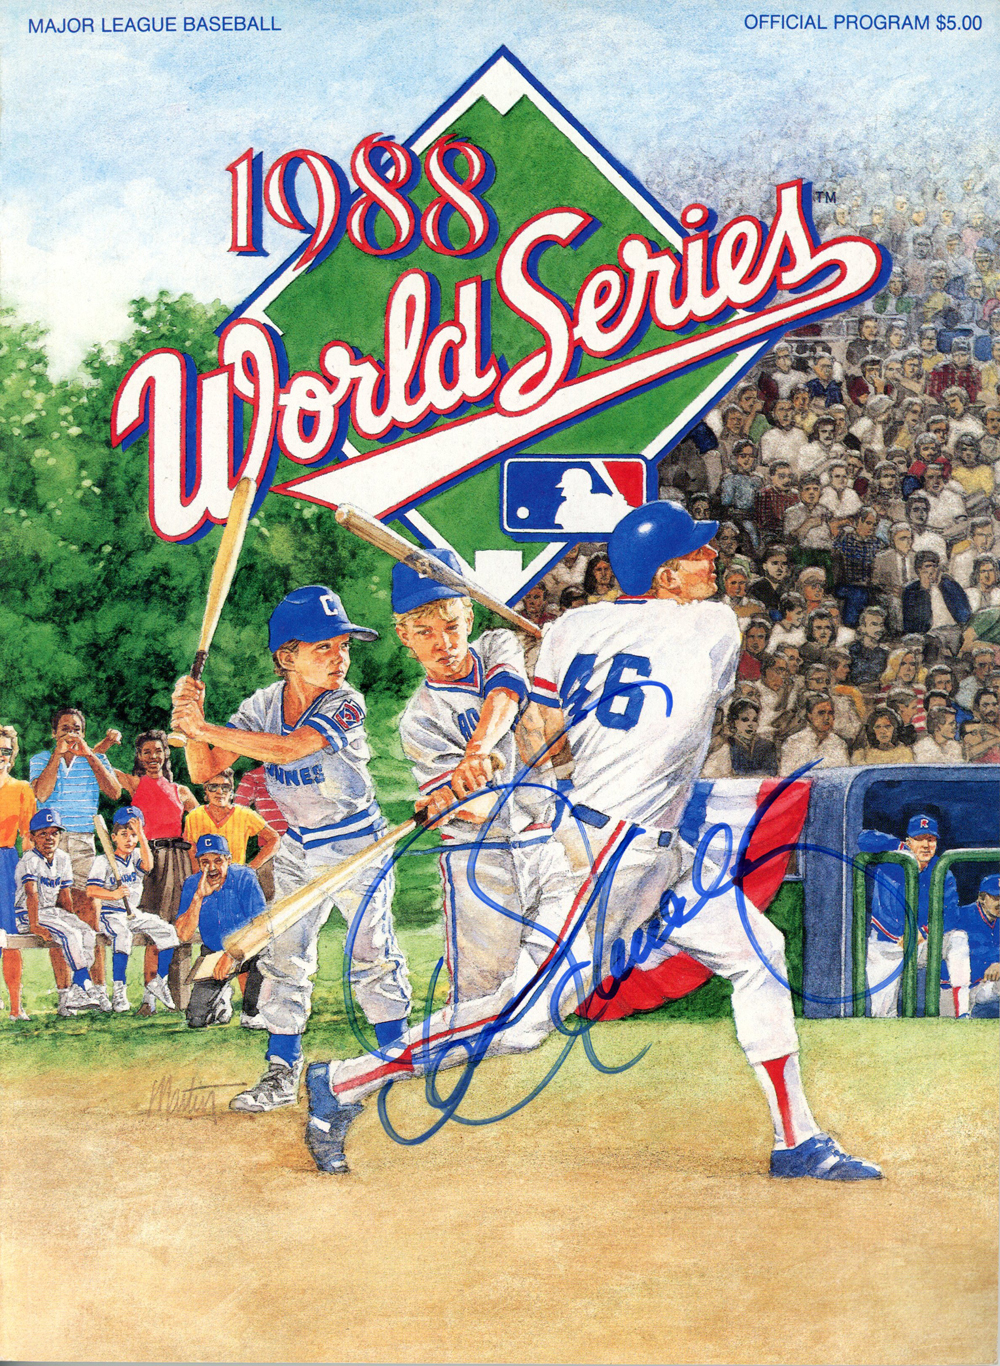 Dennis Eckersley Autographed/Signed 1988 World Series Program Beckett